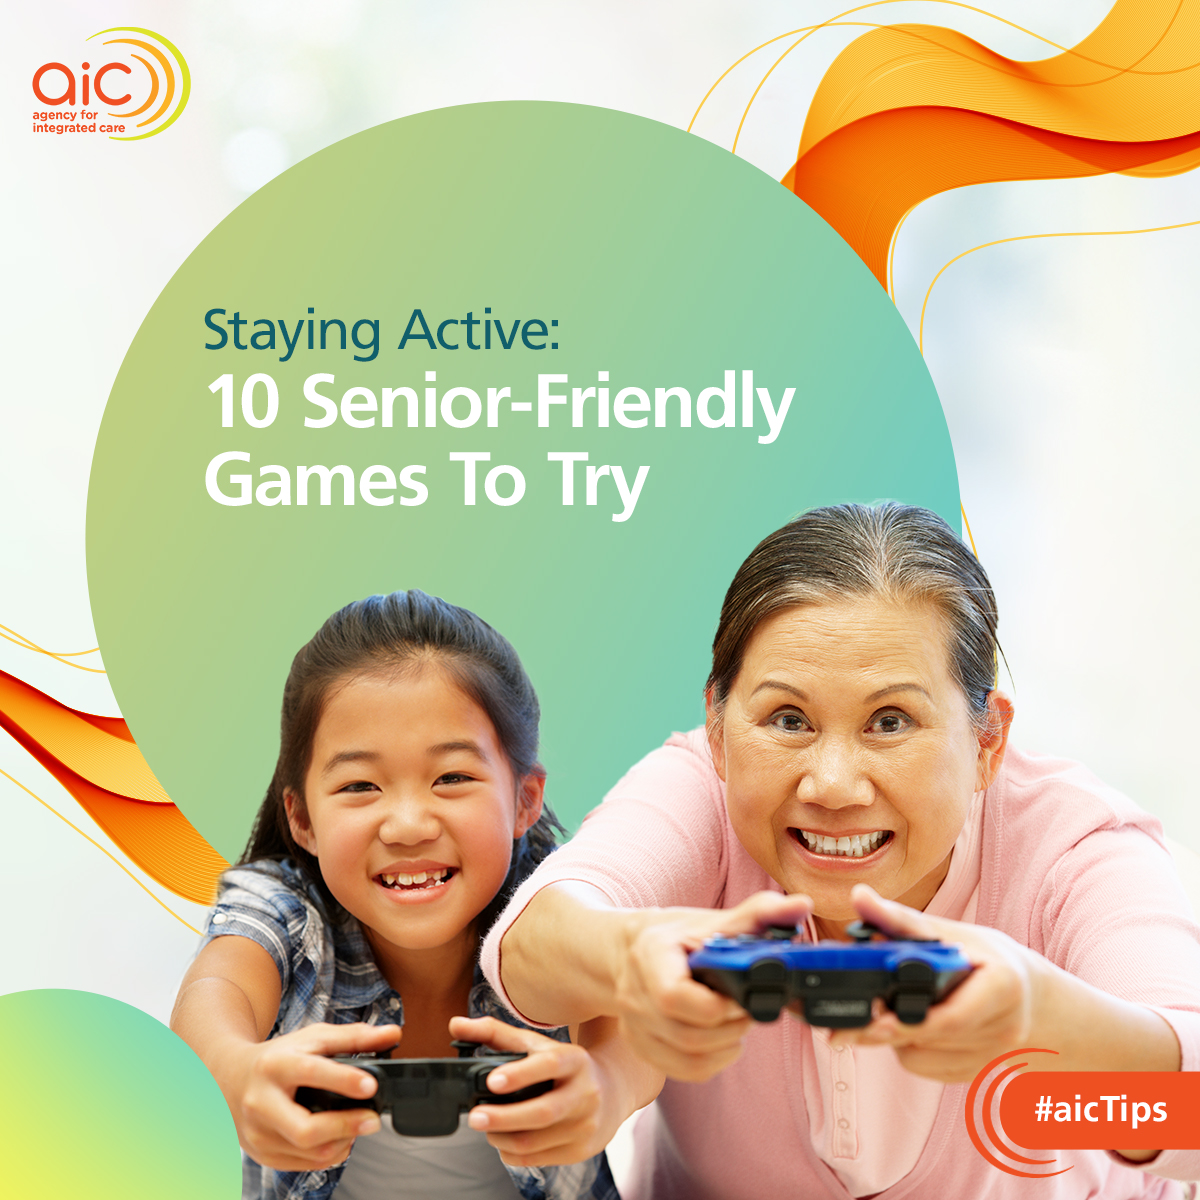 Senior-friendly game ideas for seniors